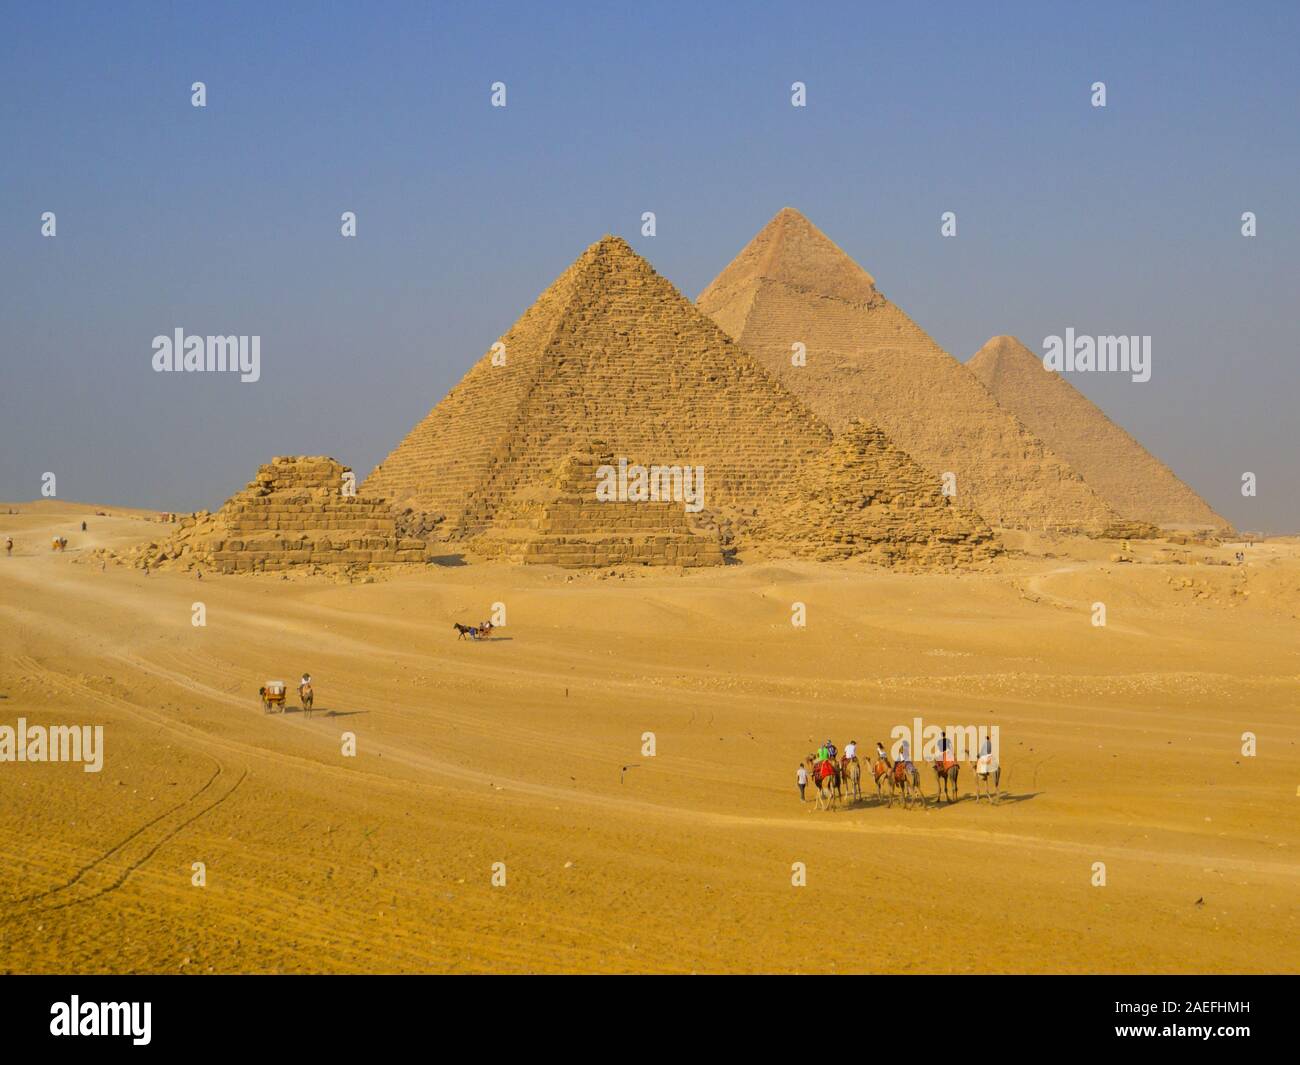 View of the Pyramids of Giza, Egypt Stock Photo